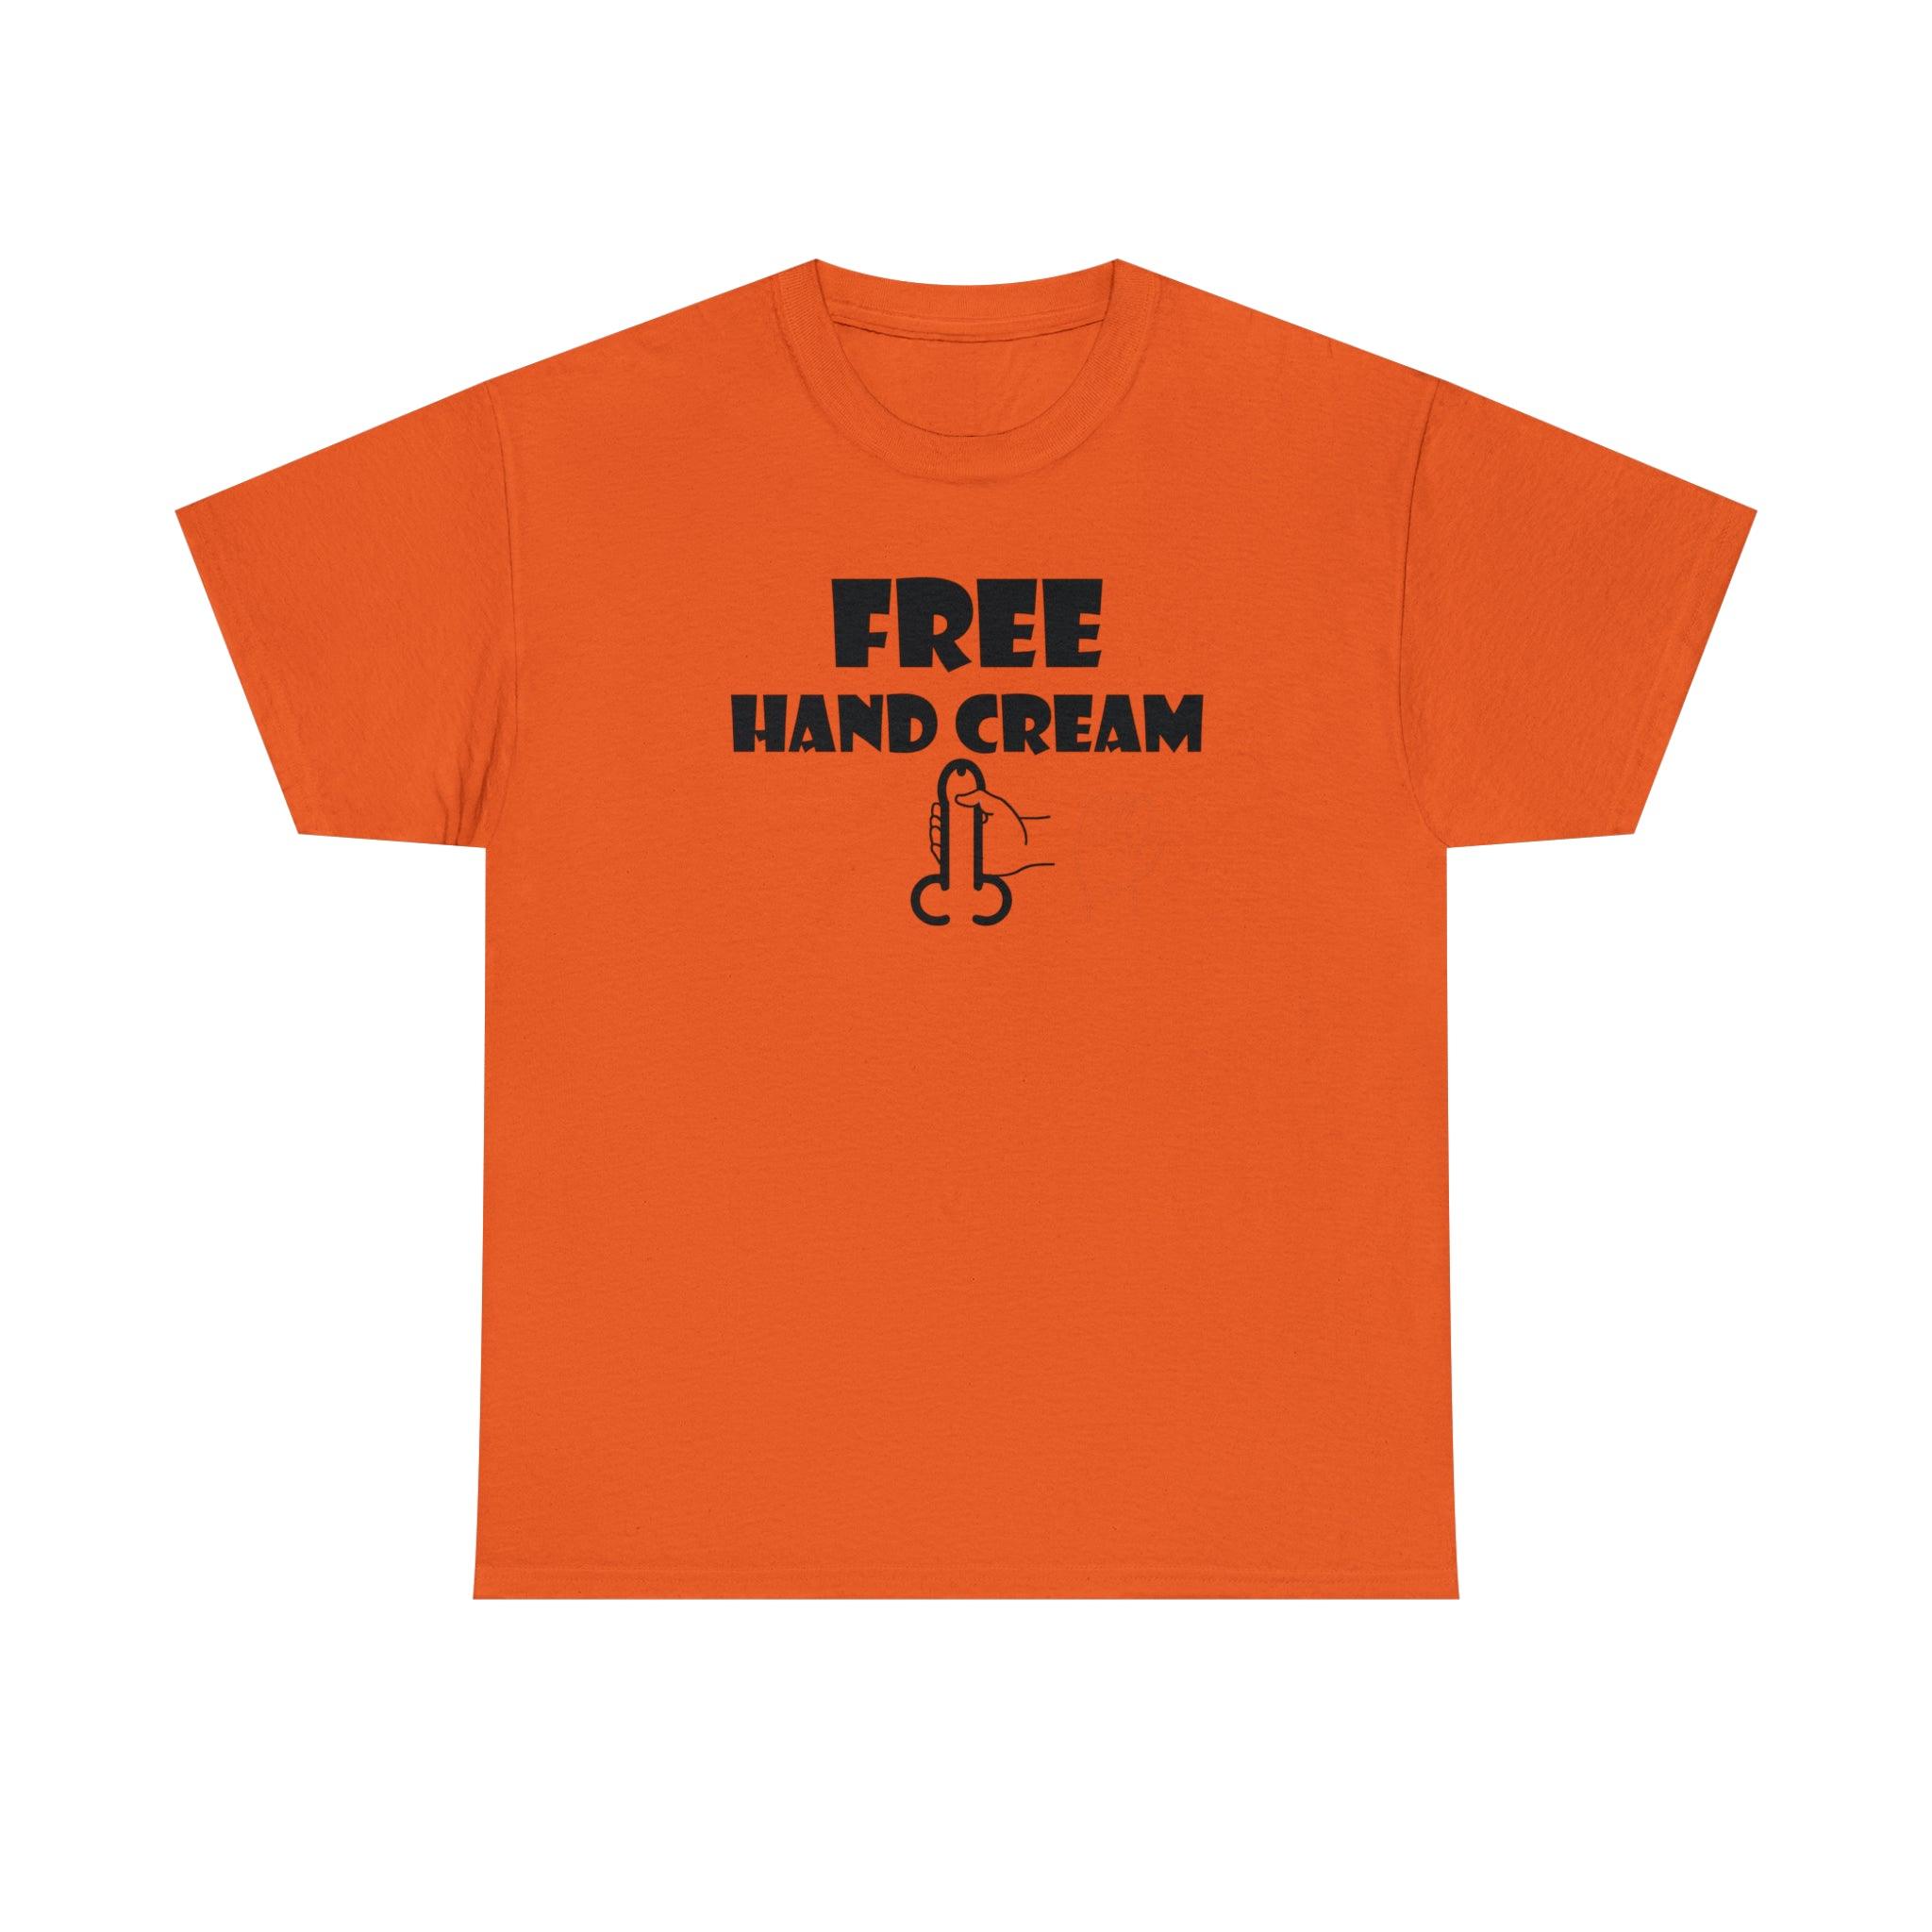 Free Hand Cream funny mens humor t-shirt about masturbation